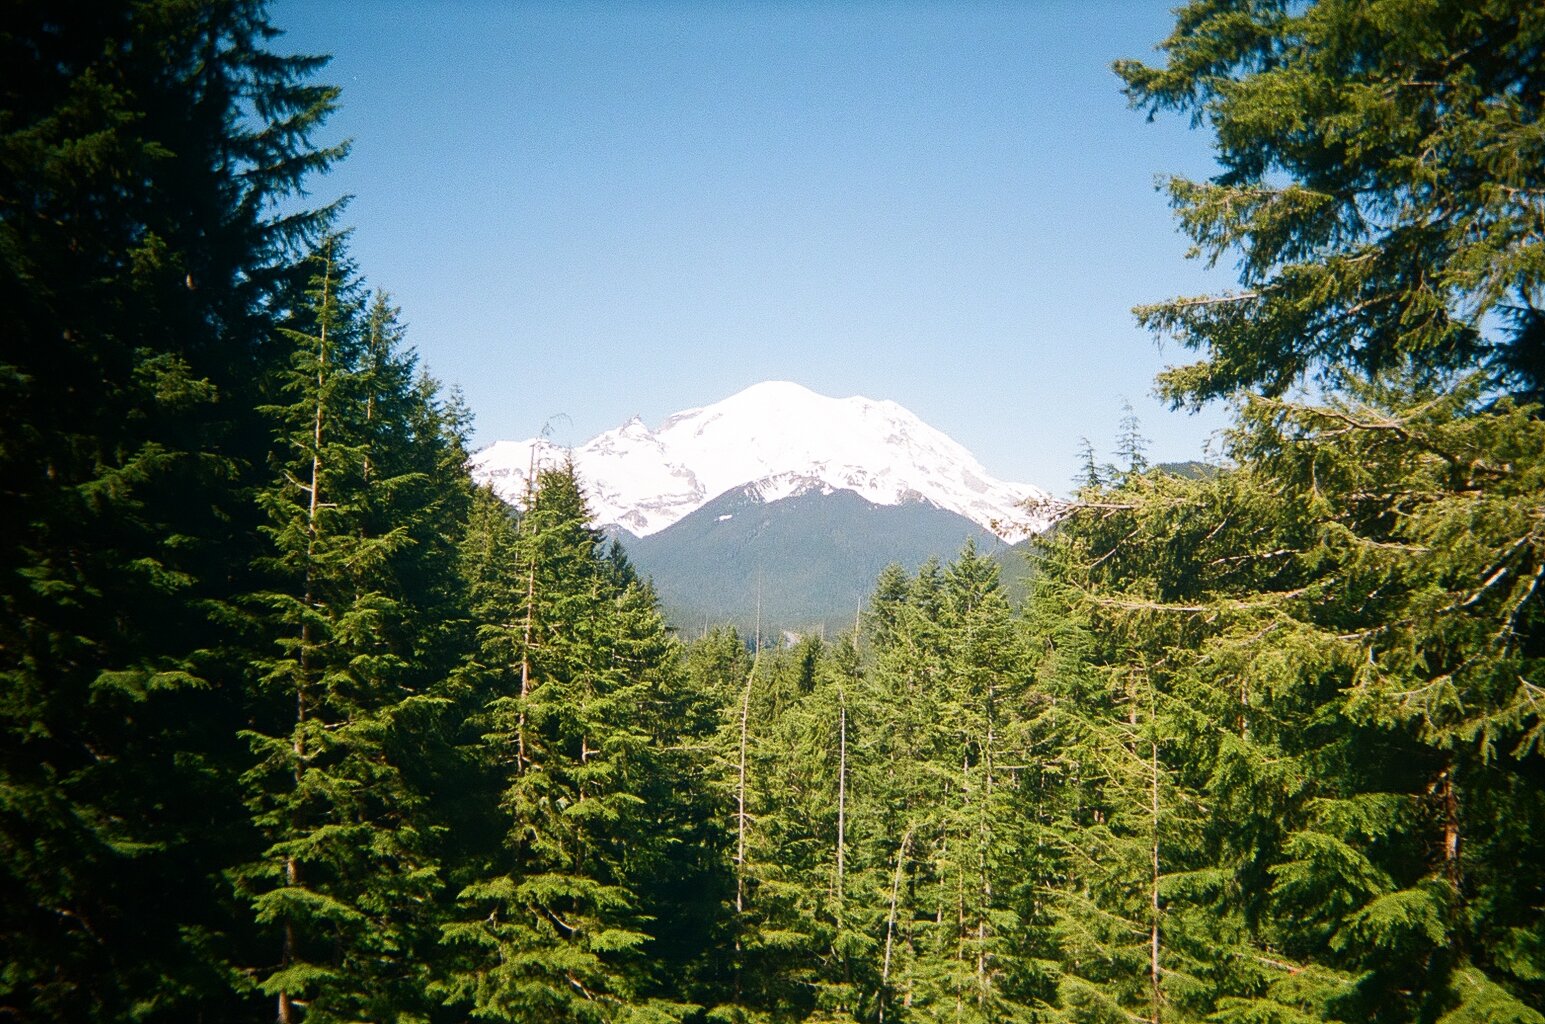  Mount Rainier National Park, Washington. 2021. 